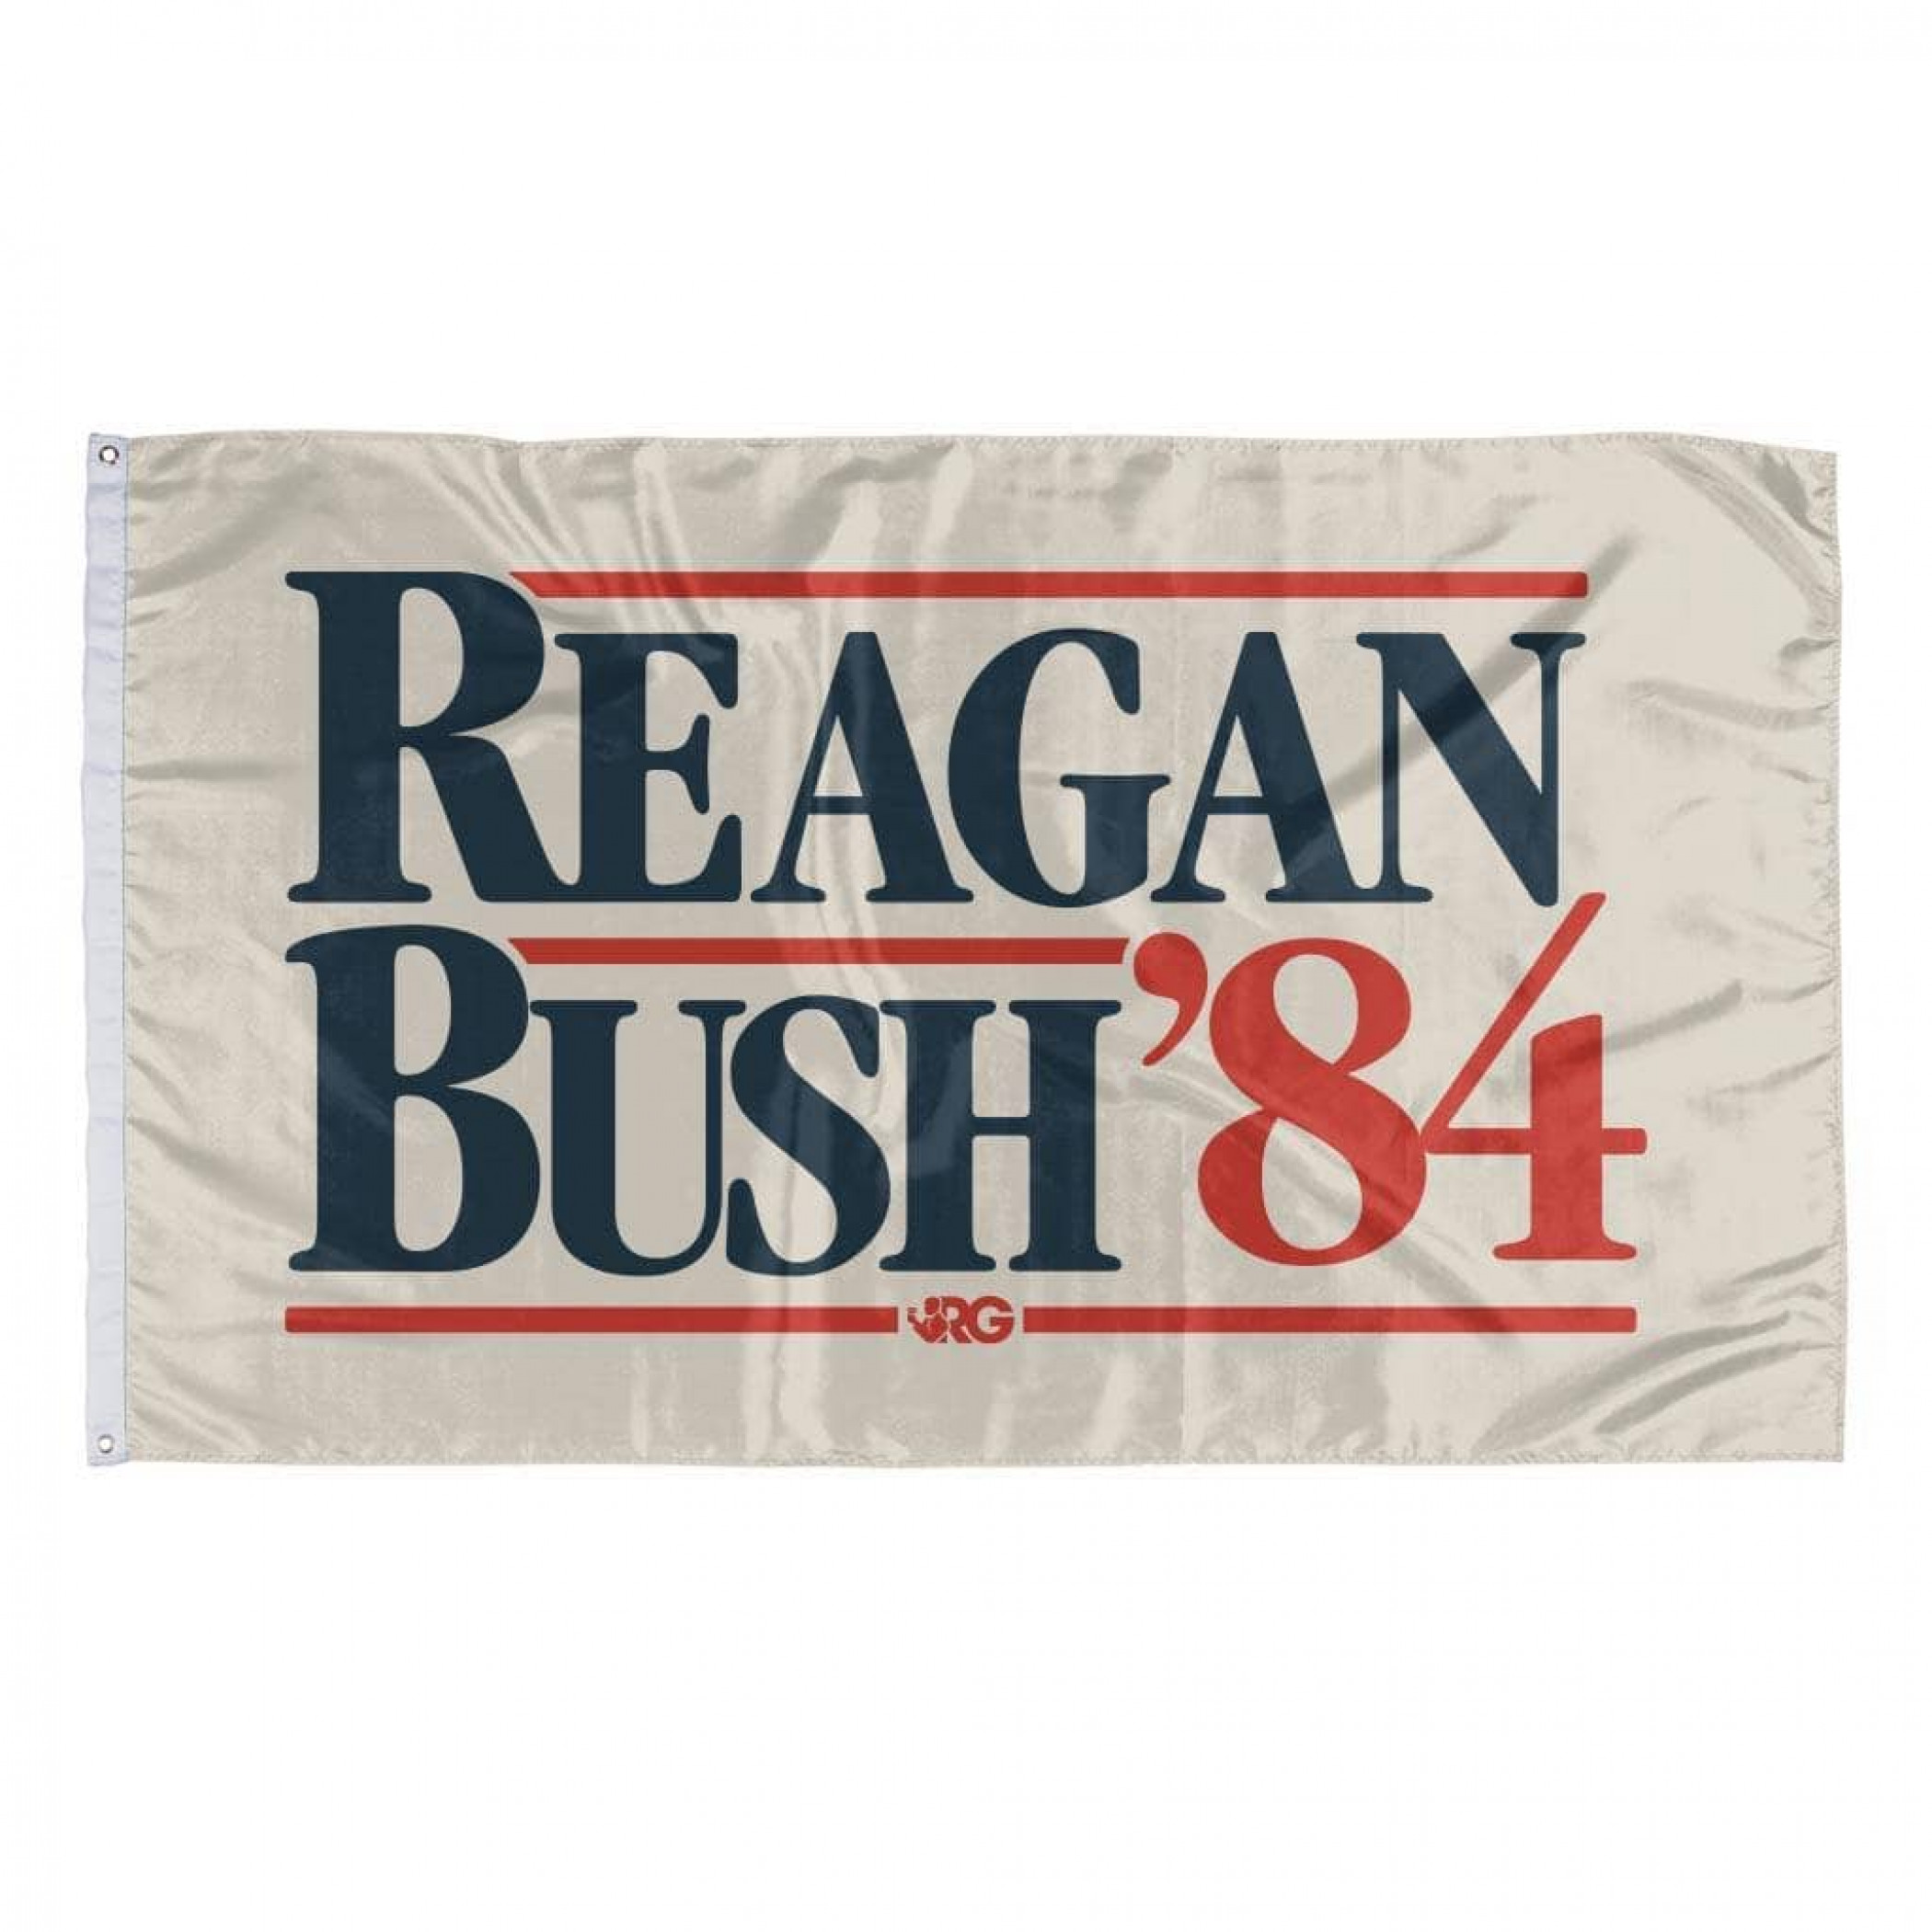 Reagan Bush '84 - Off White